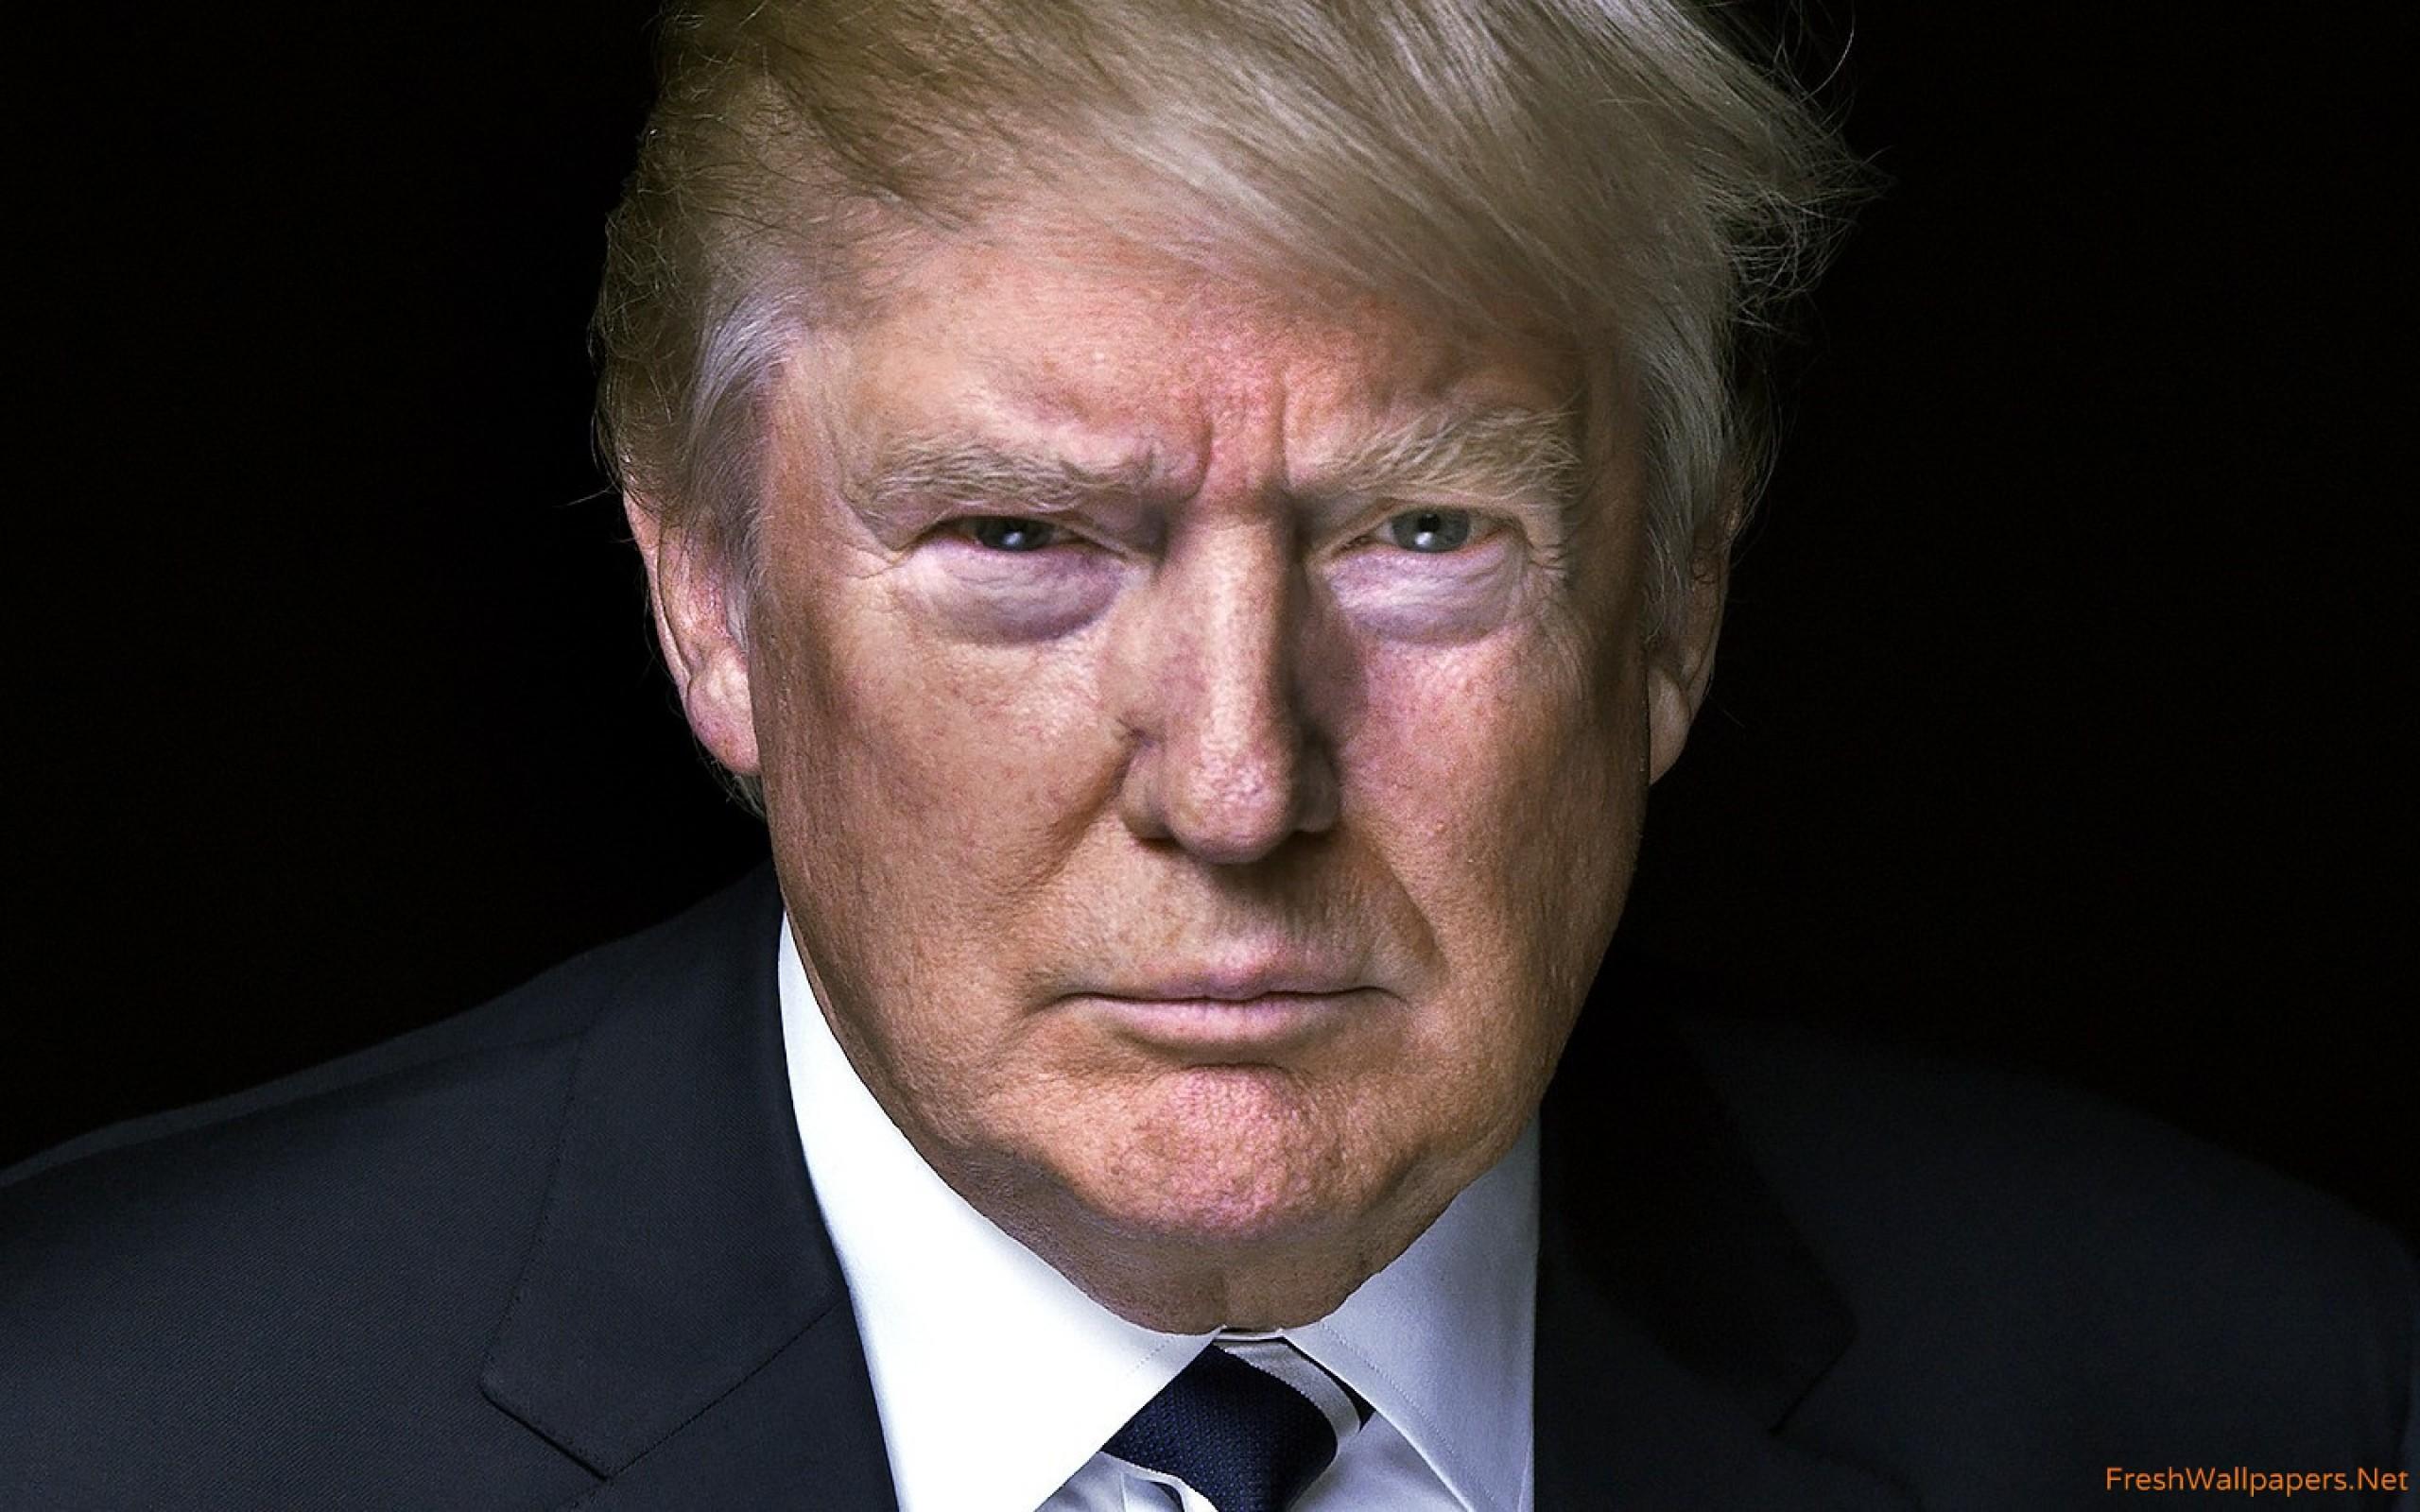 Donald Trump Wallpaper background picture